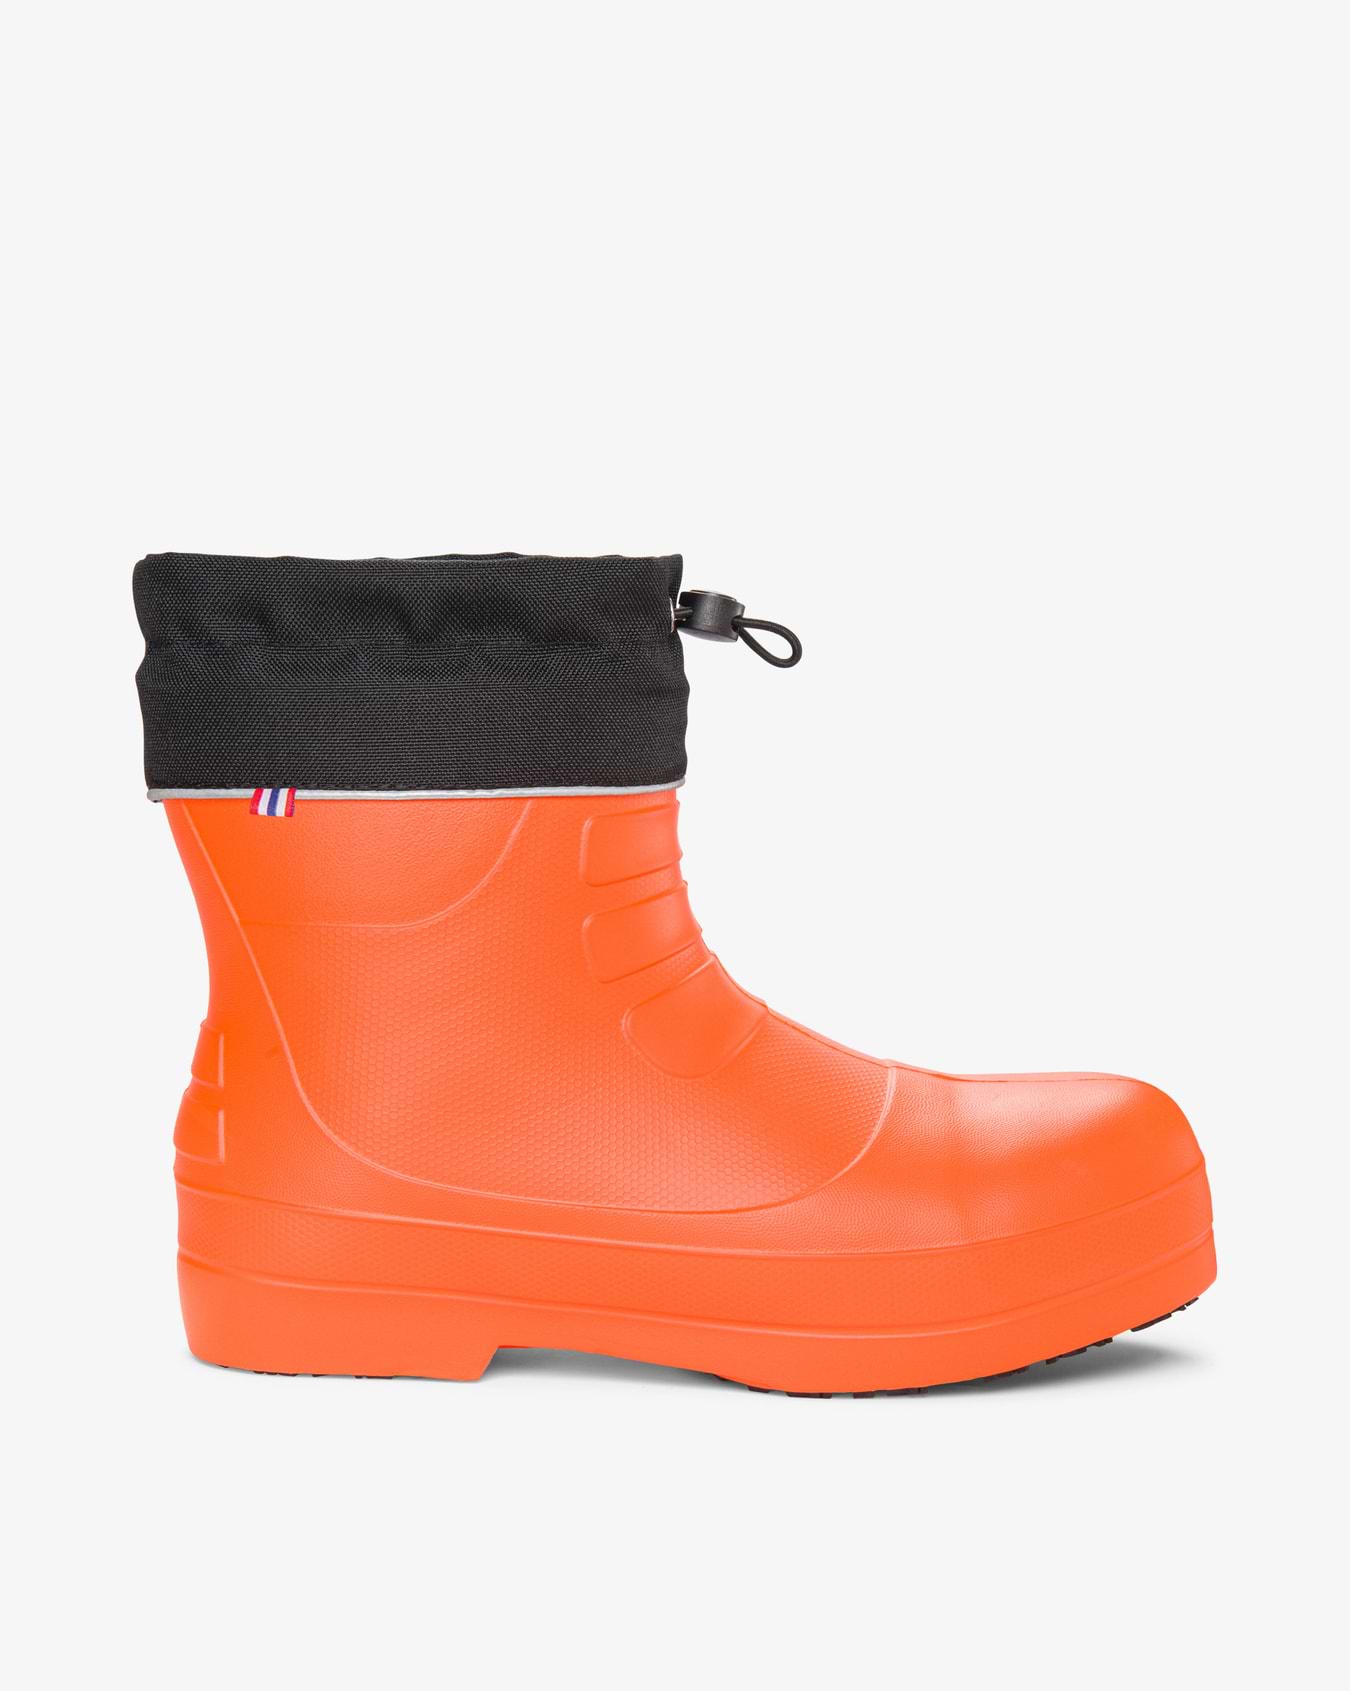 Norse  Orange/Black Low Boot